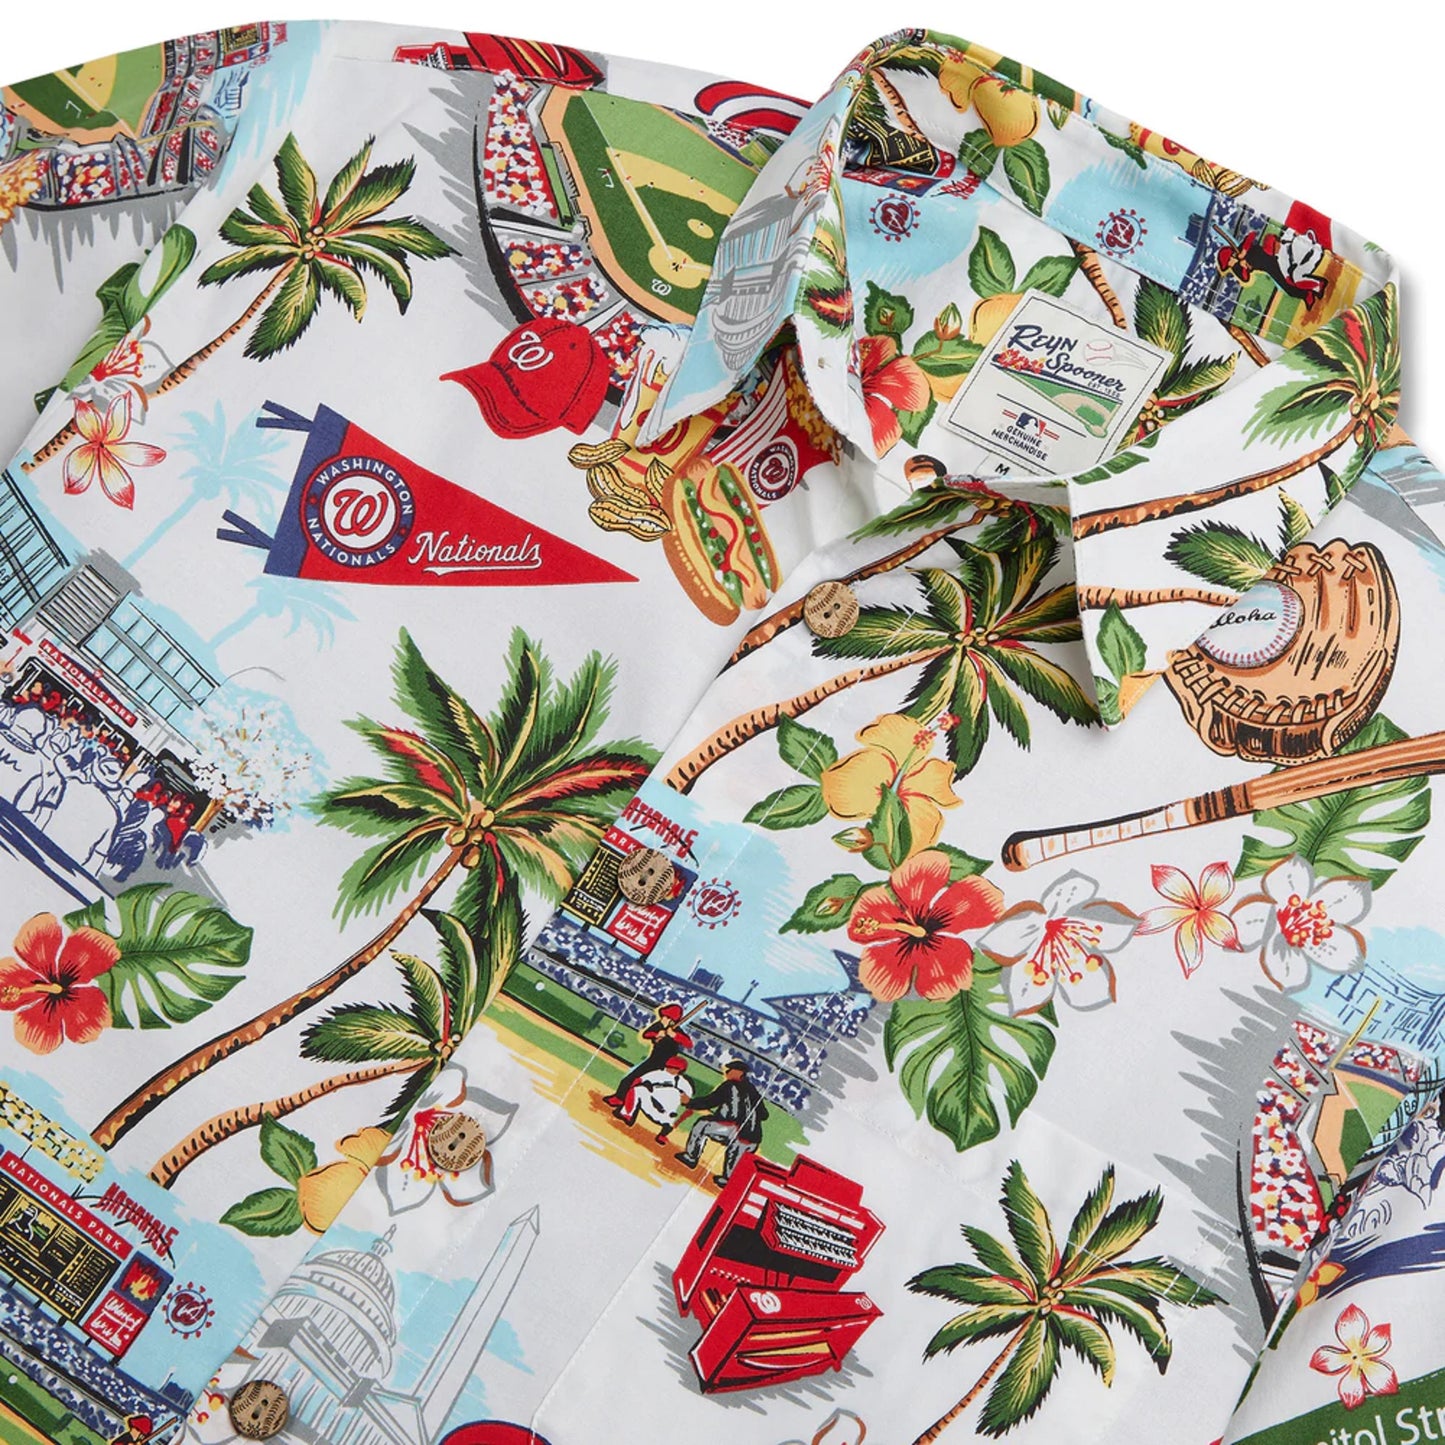 Reyn Spooner Men's Washington Nationals Classic Fit Scenic Hawaiian Shirt, Style# 5540